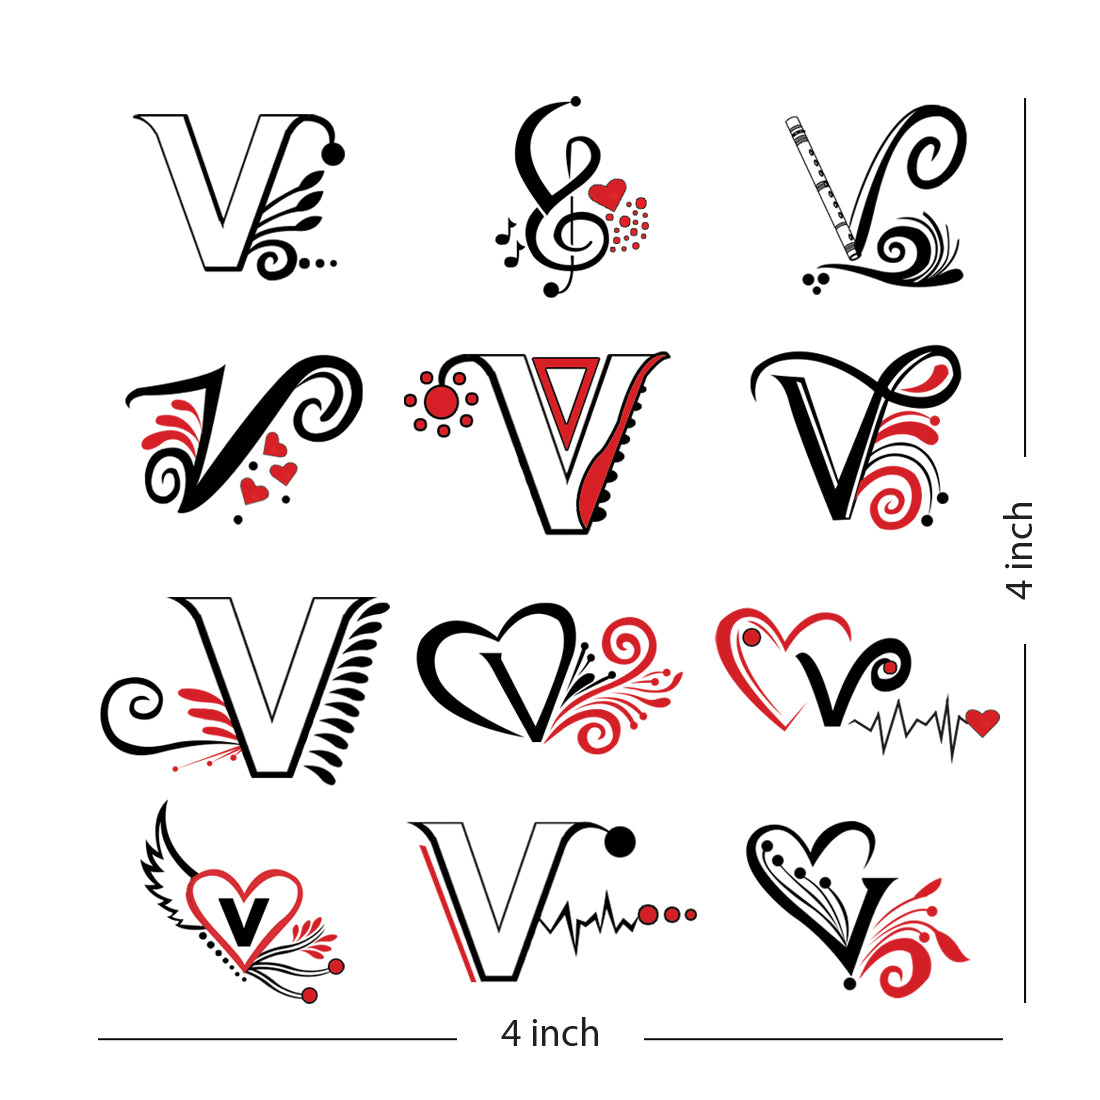 S+V heart (Union) s+v heart heartigram original tribal tattoo design